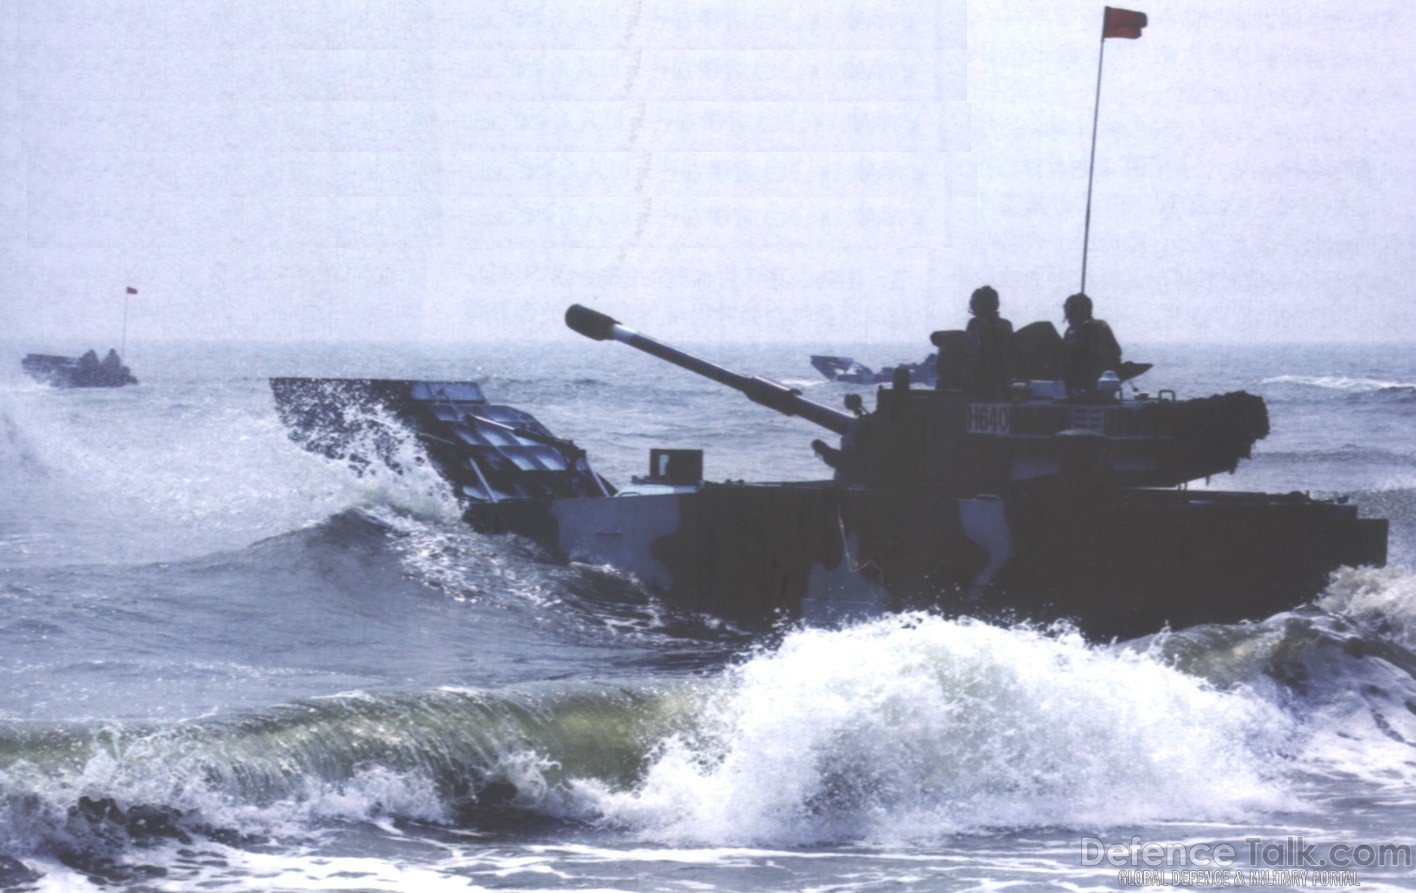 ZBD 97 IFV  - Peopleâs Liberation Army